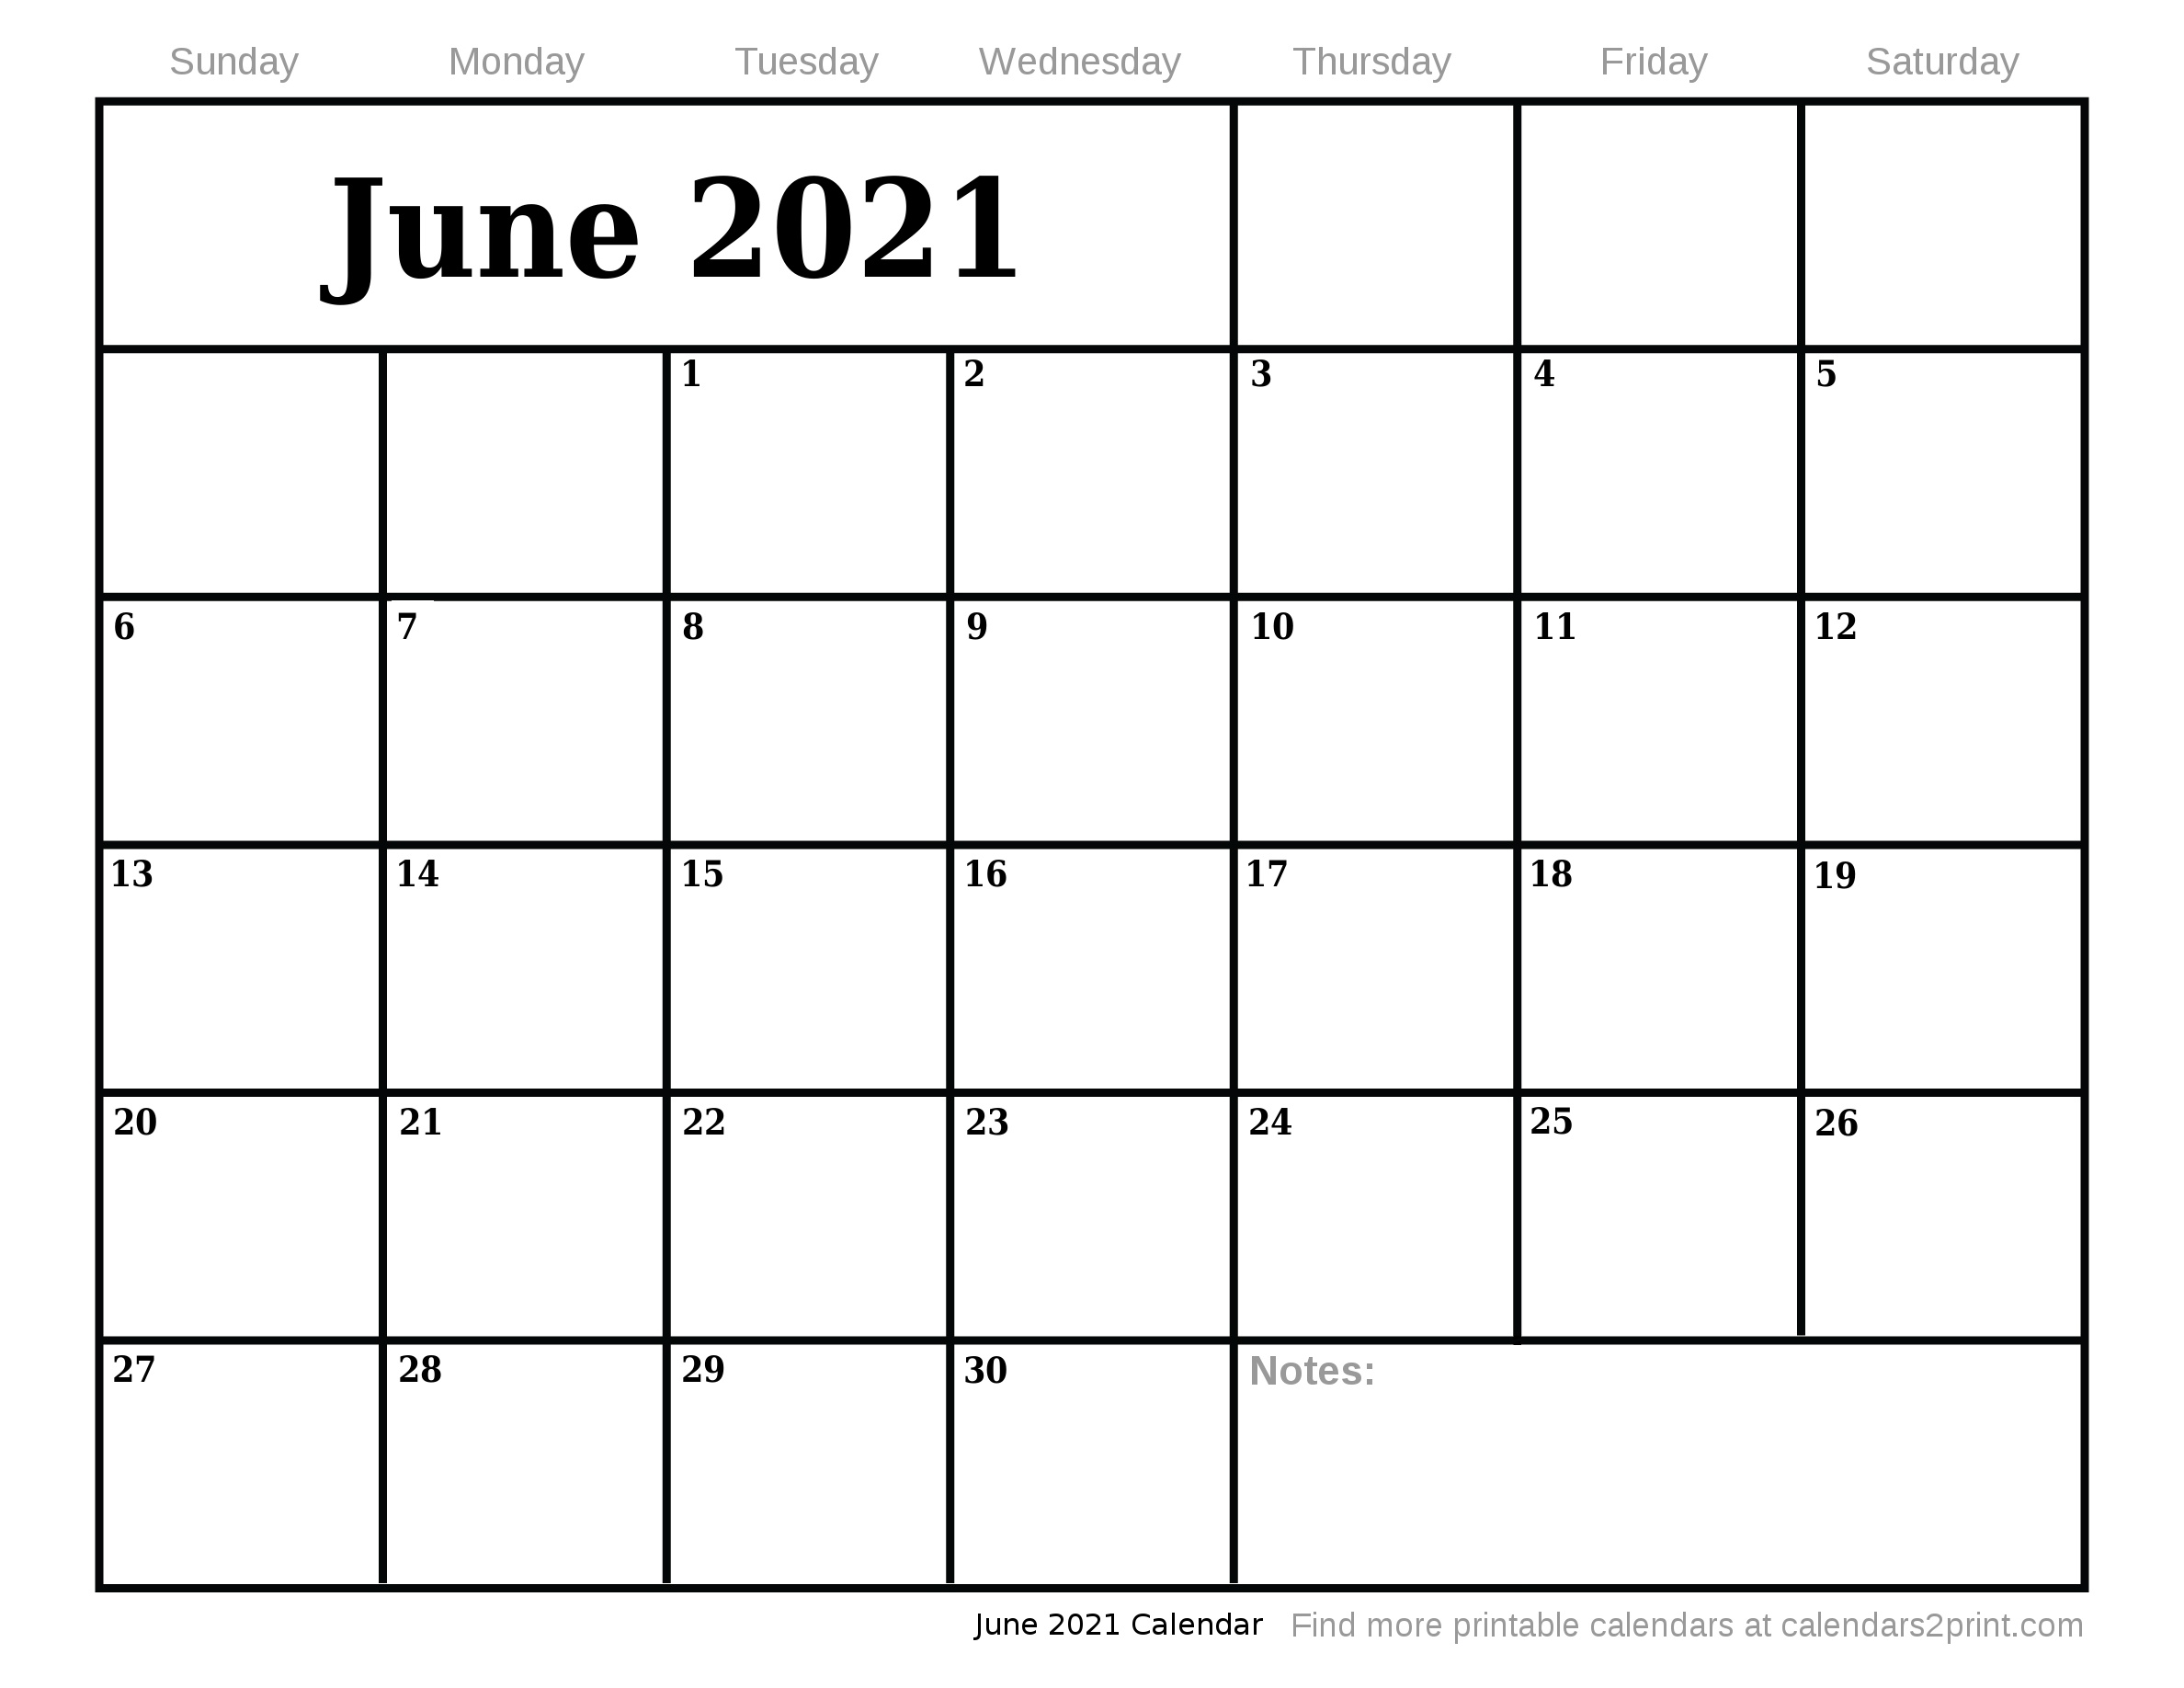 Jun 2021 Printable Calendar